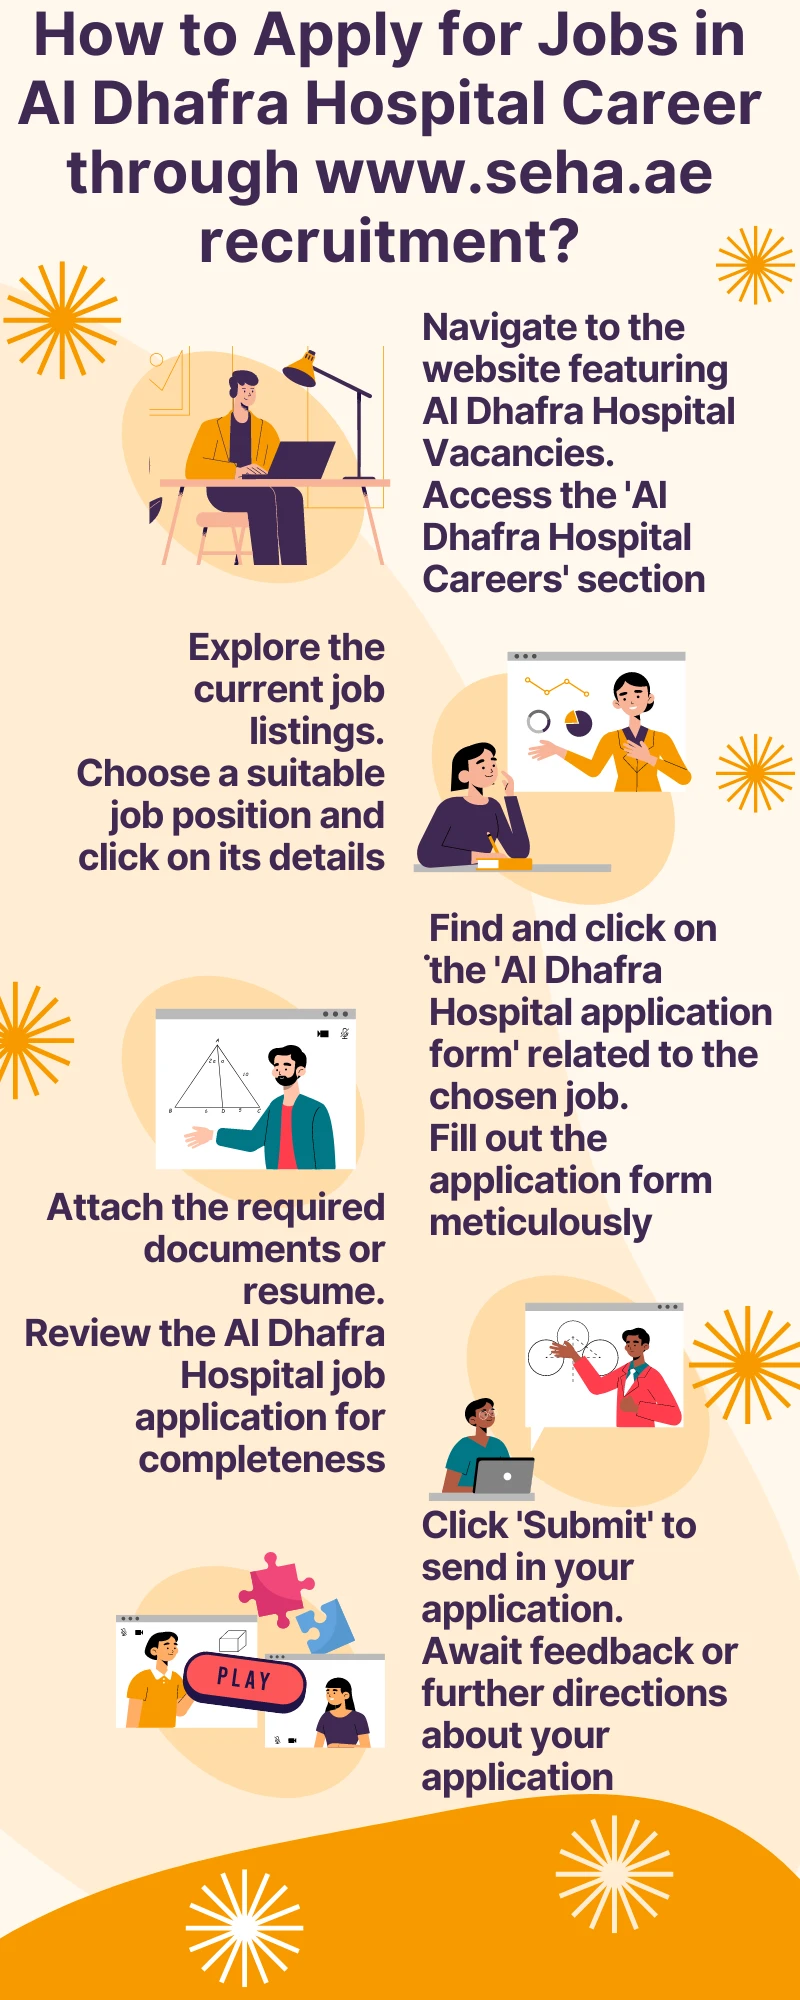 How to Apply for Jobs in Al Dhafra Hospital Career through www.seha.ae recruitment?